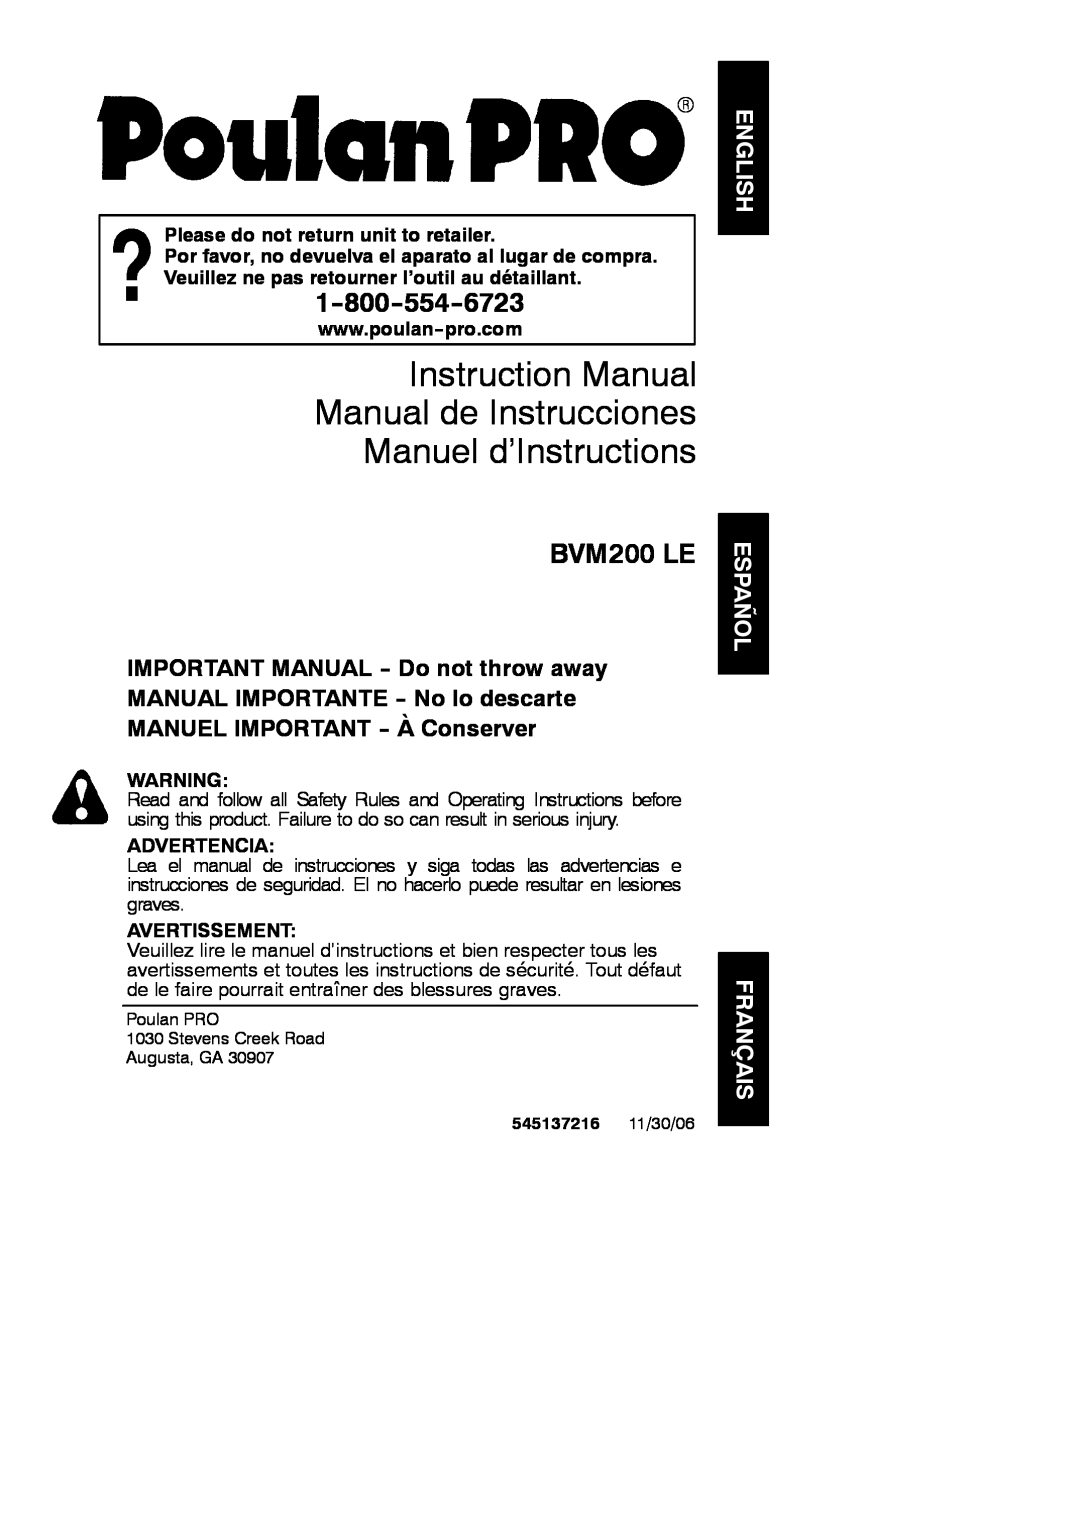 Poulan BVM200 LE instruction manual English Español Français, Please do not return unit to retailer, Advertencia 